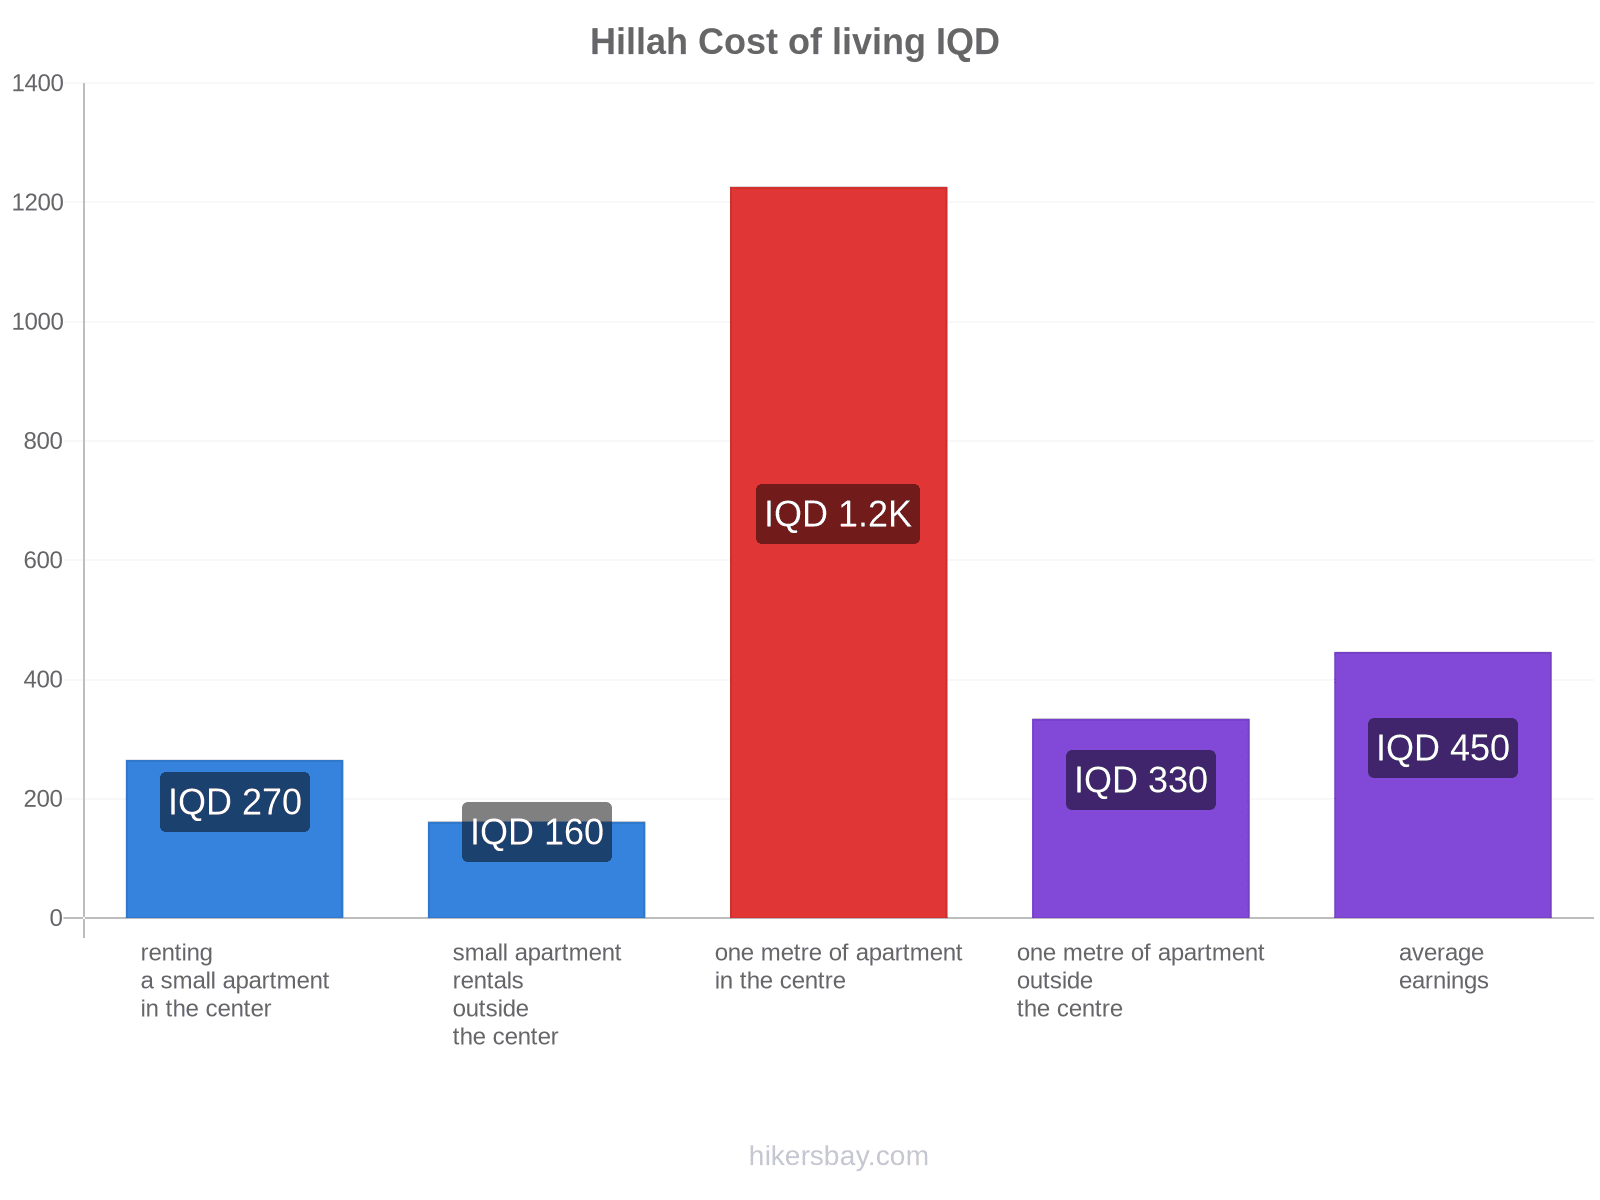 Hillah cost of living hikersbay.com